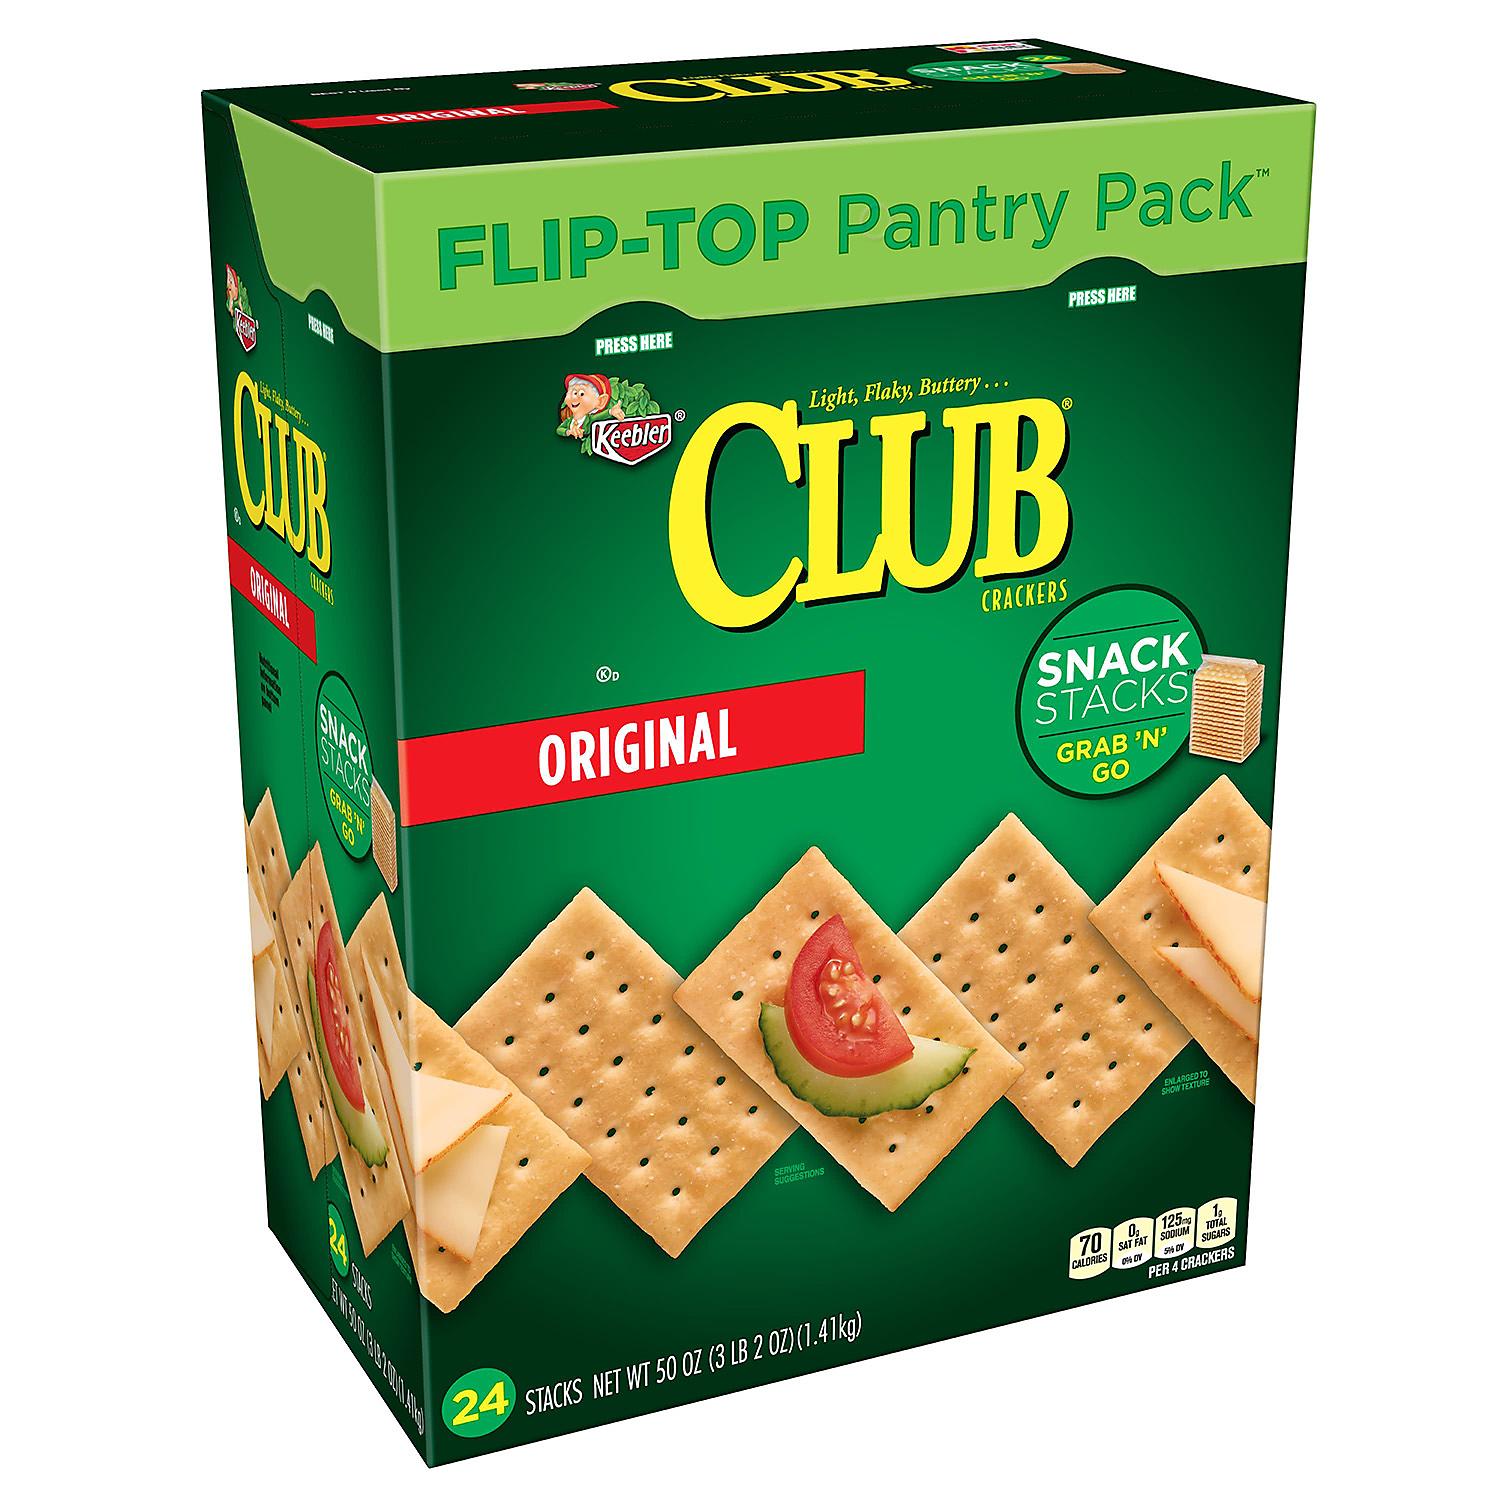 Keebler Club Crackers Snack Stacks (2.08 oz., 24 pk.) - image 1 of 2